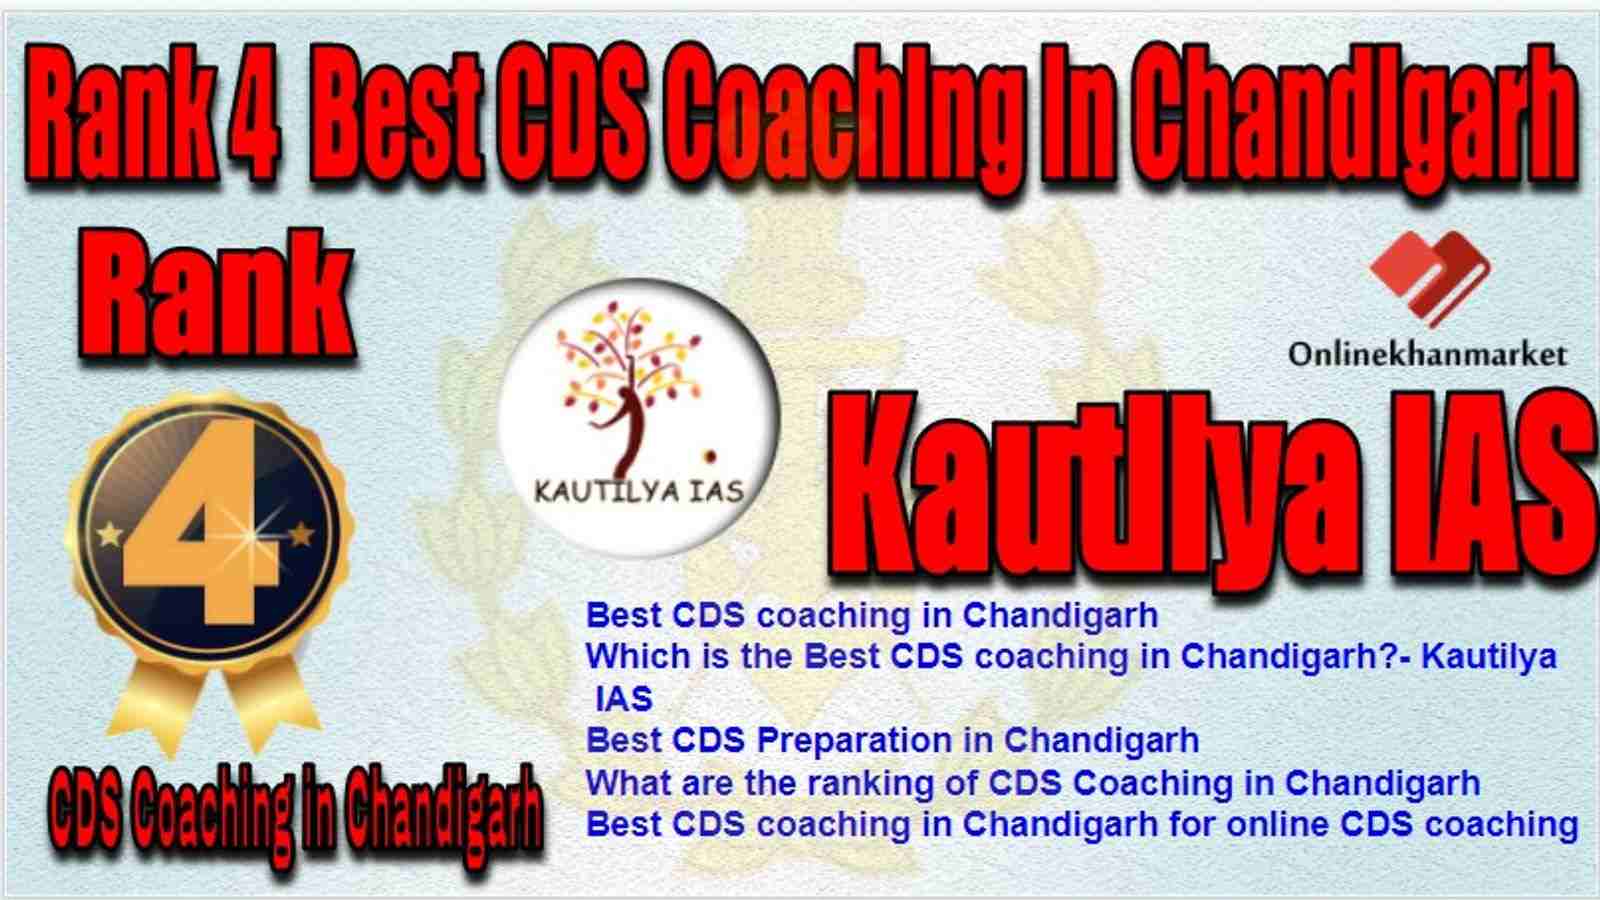 Rank 4 Best CDS Coaching in chandigarh